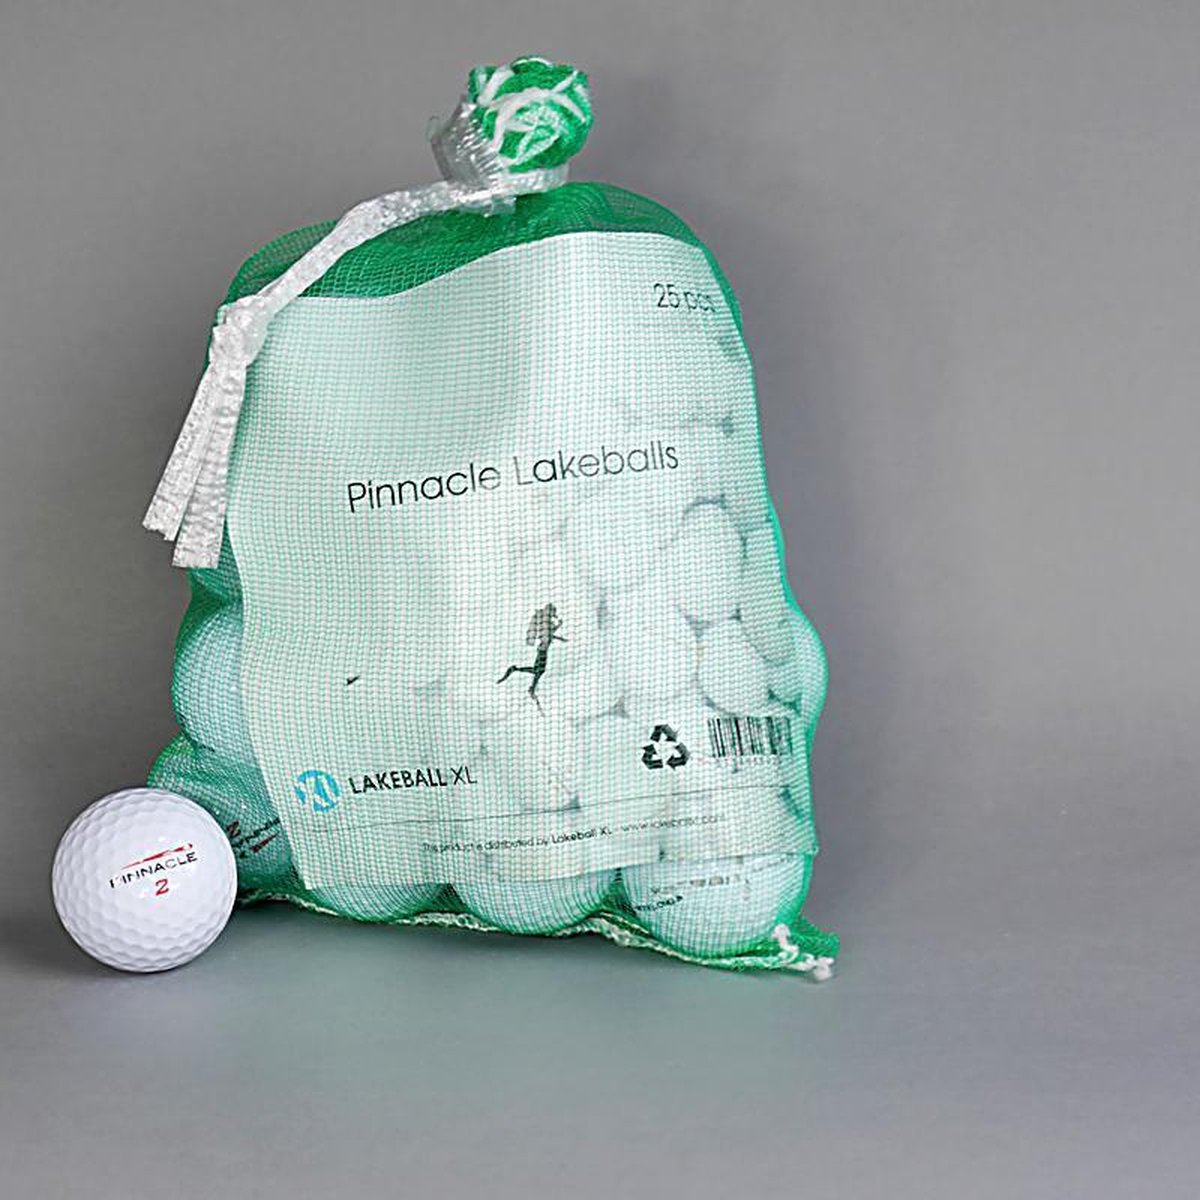 XL Golfballen gebruikt/lakeballs Pinnacle 25 in meshbag | bol.com